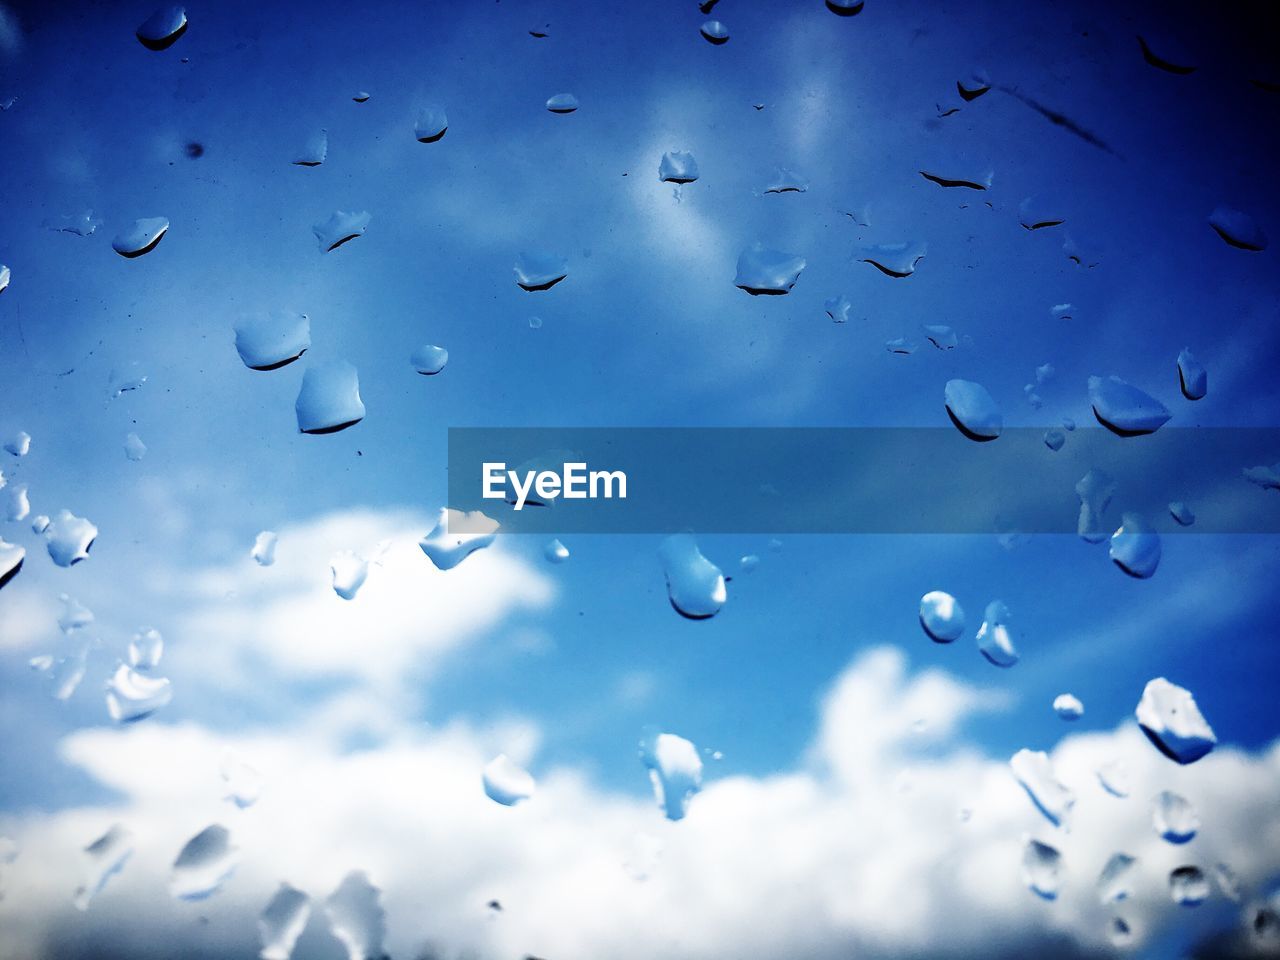 Cloudy sky seen through wet glass during monsoon